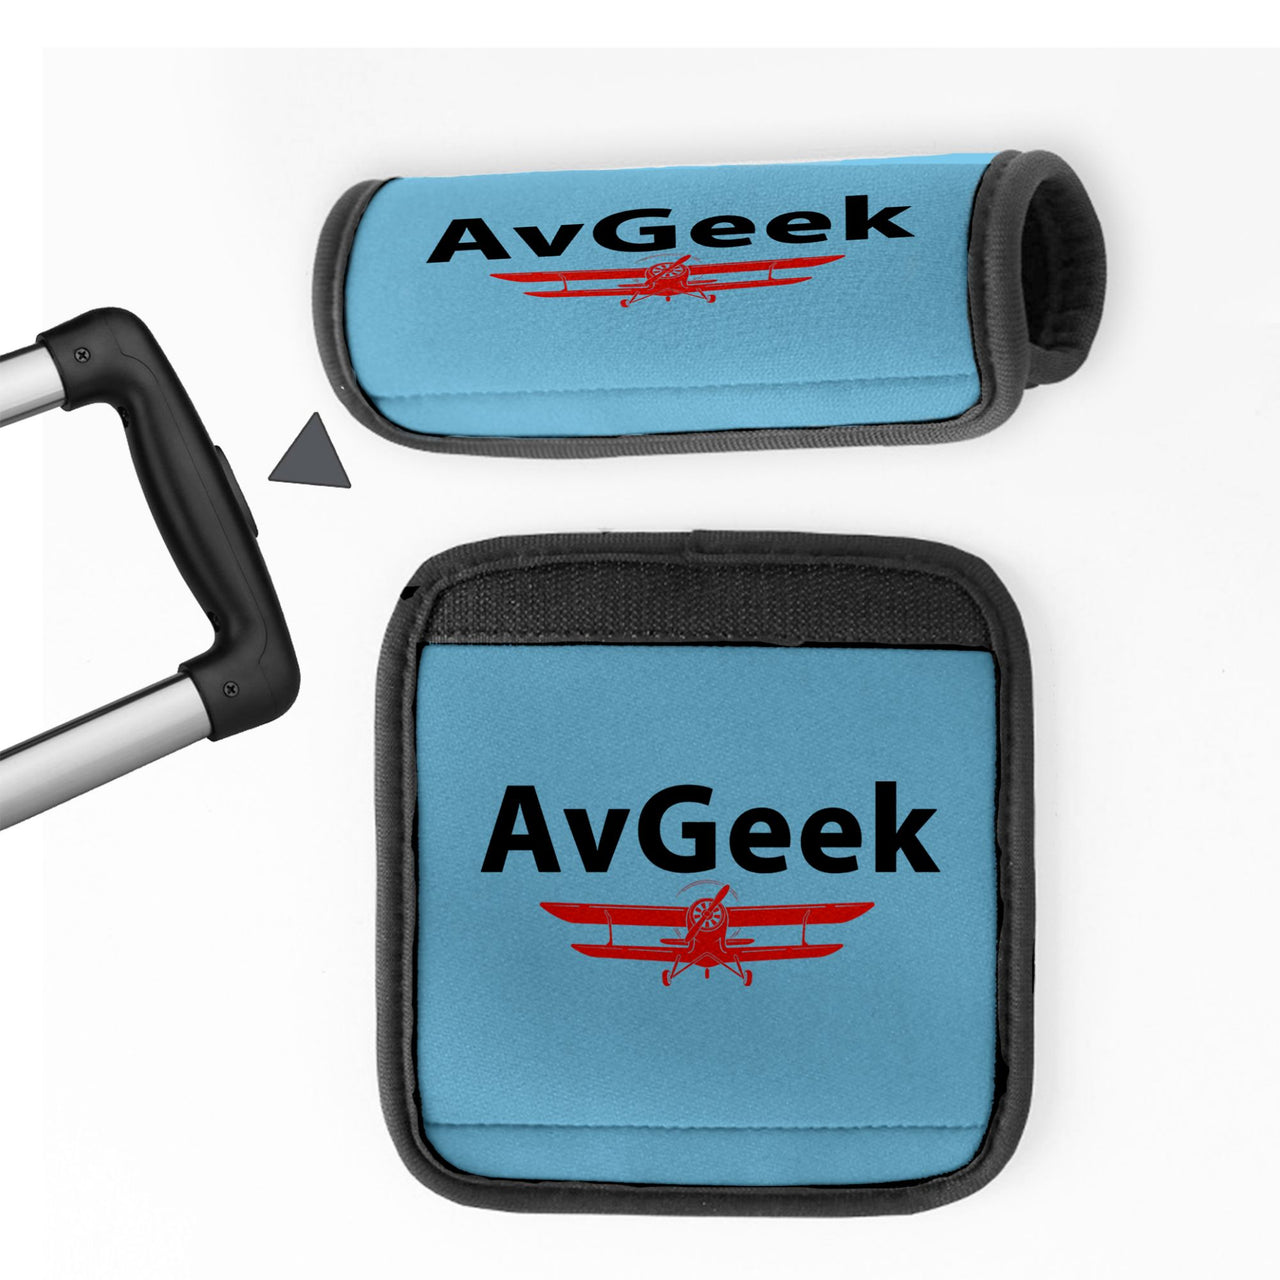 Avgeek Designed Neoprene Luggage Handle Covers